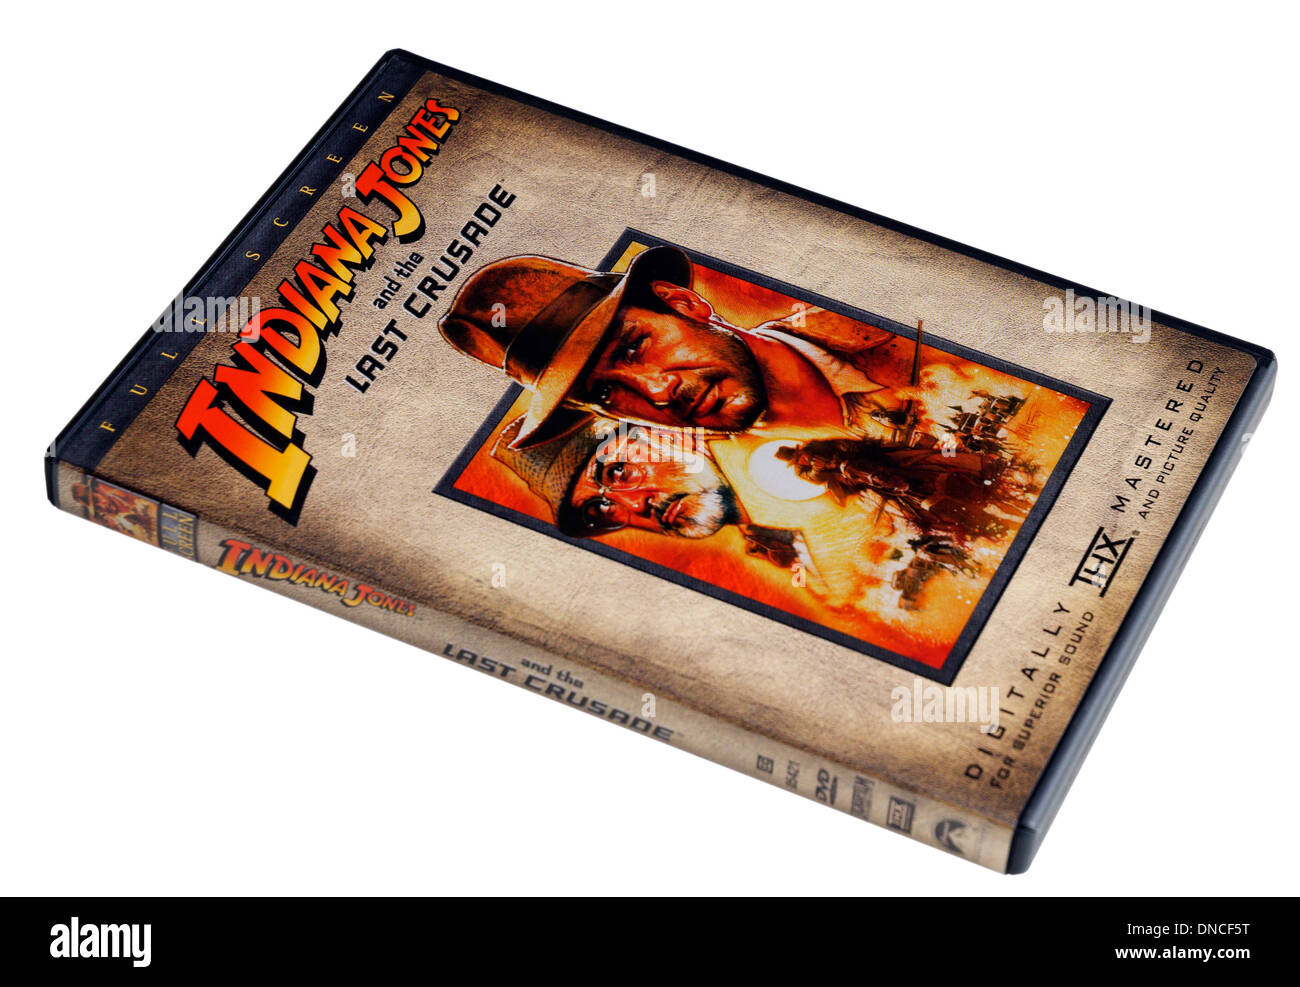 Indiana Jones e l'ultima crociata su DVD Foto stock - Alamy